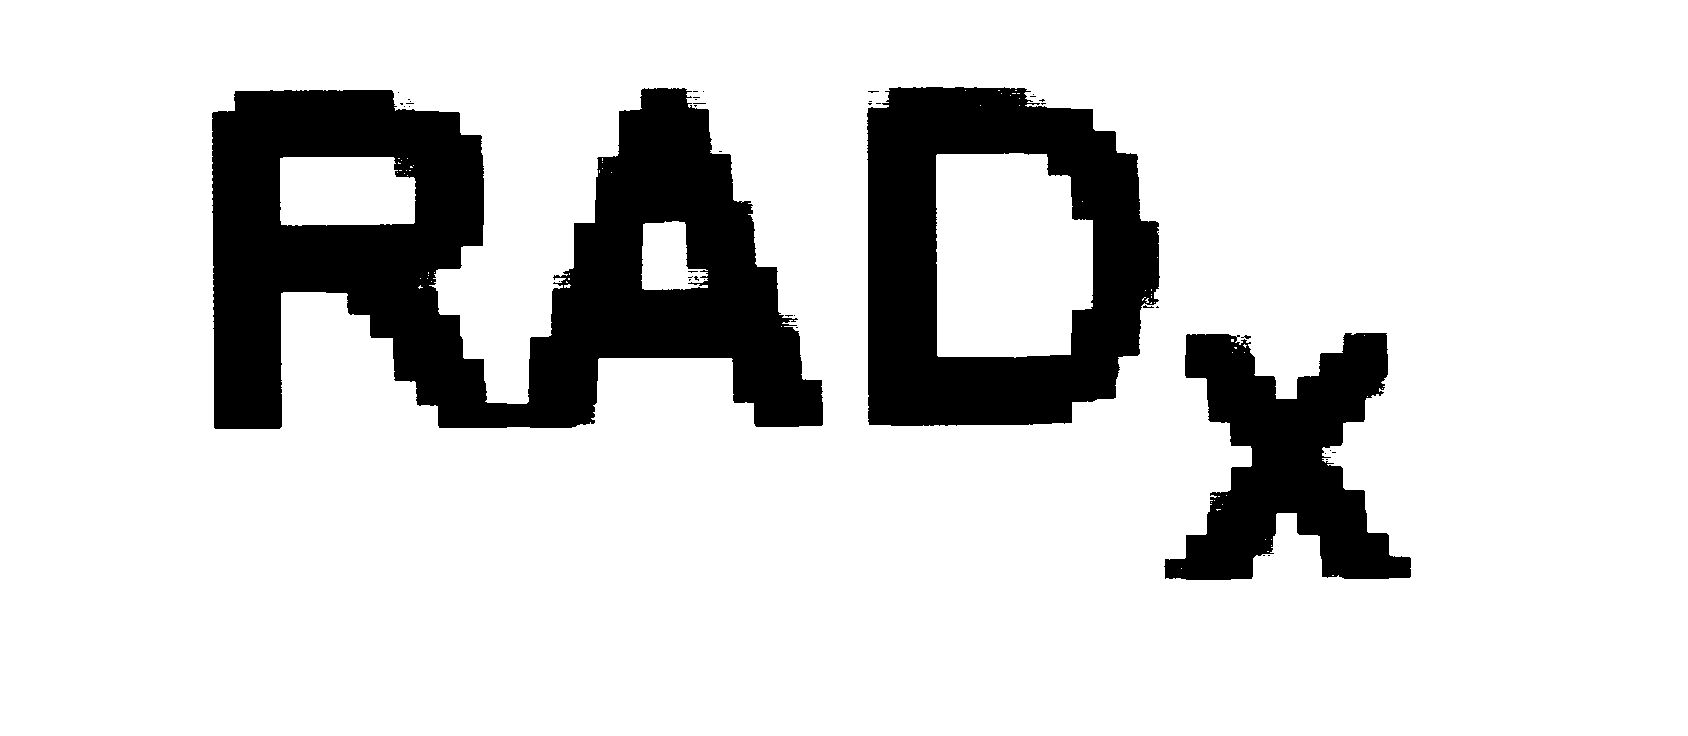 Trademark Logo RADX